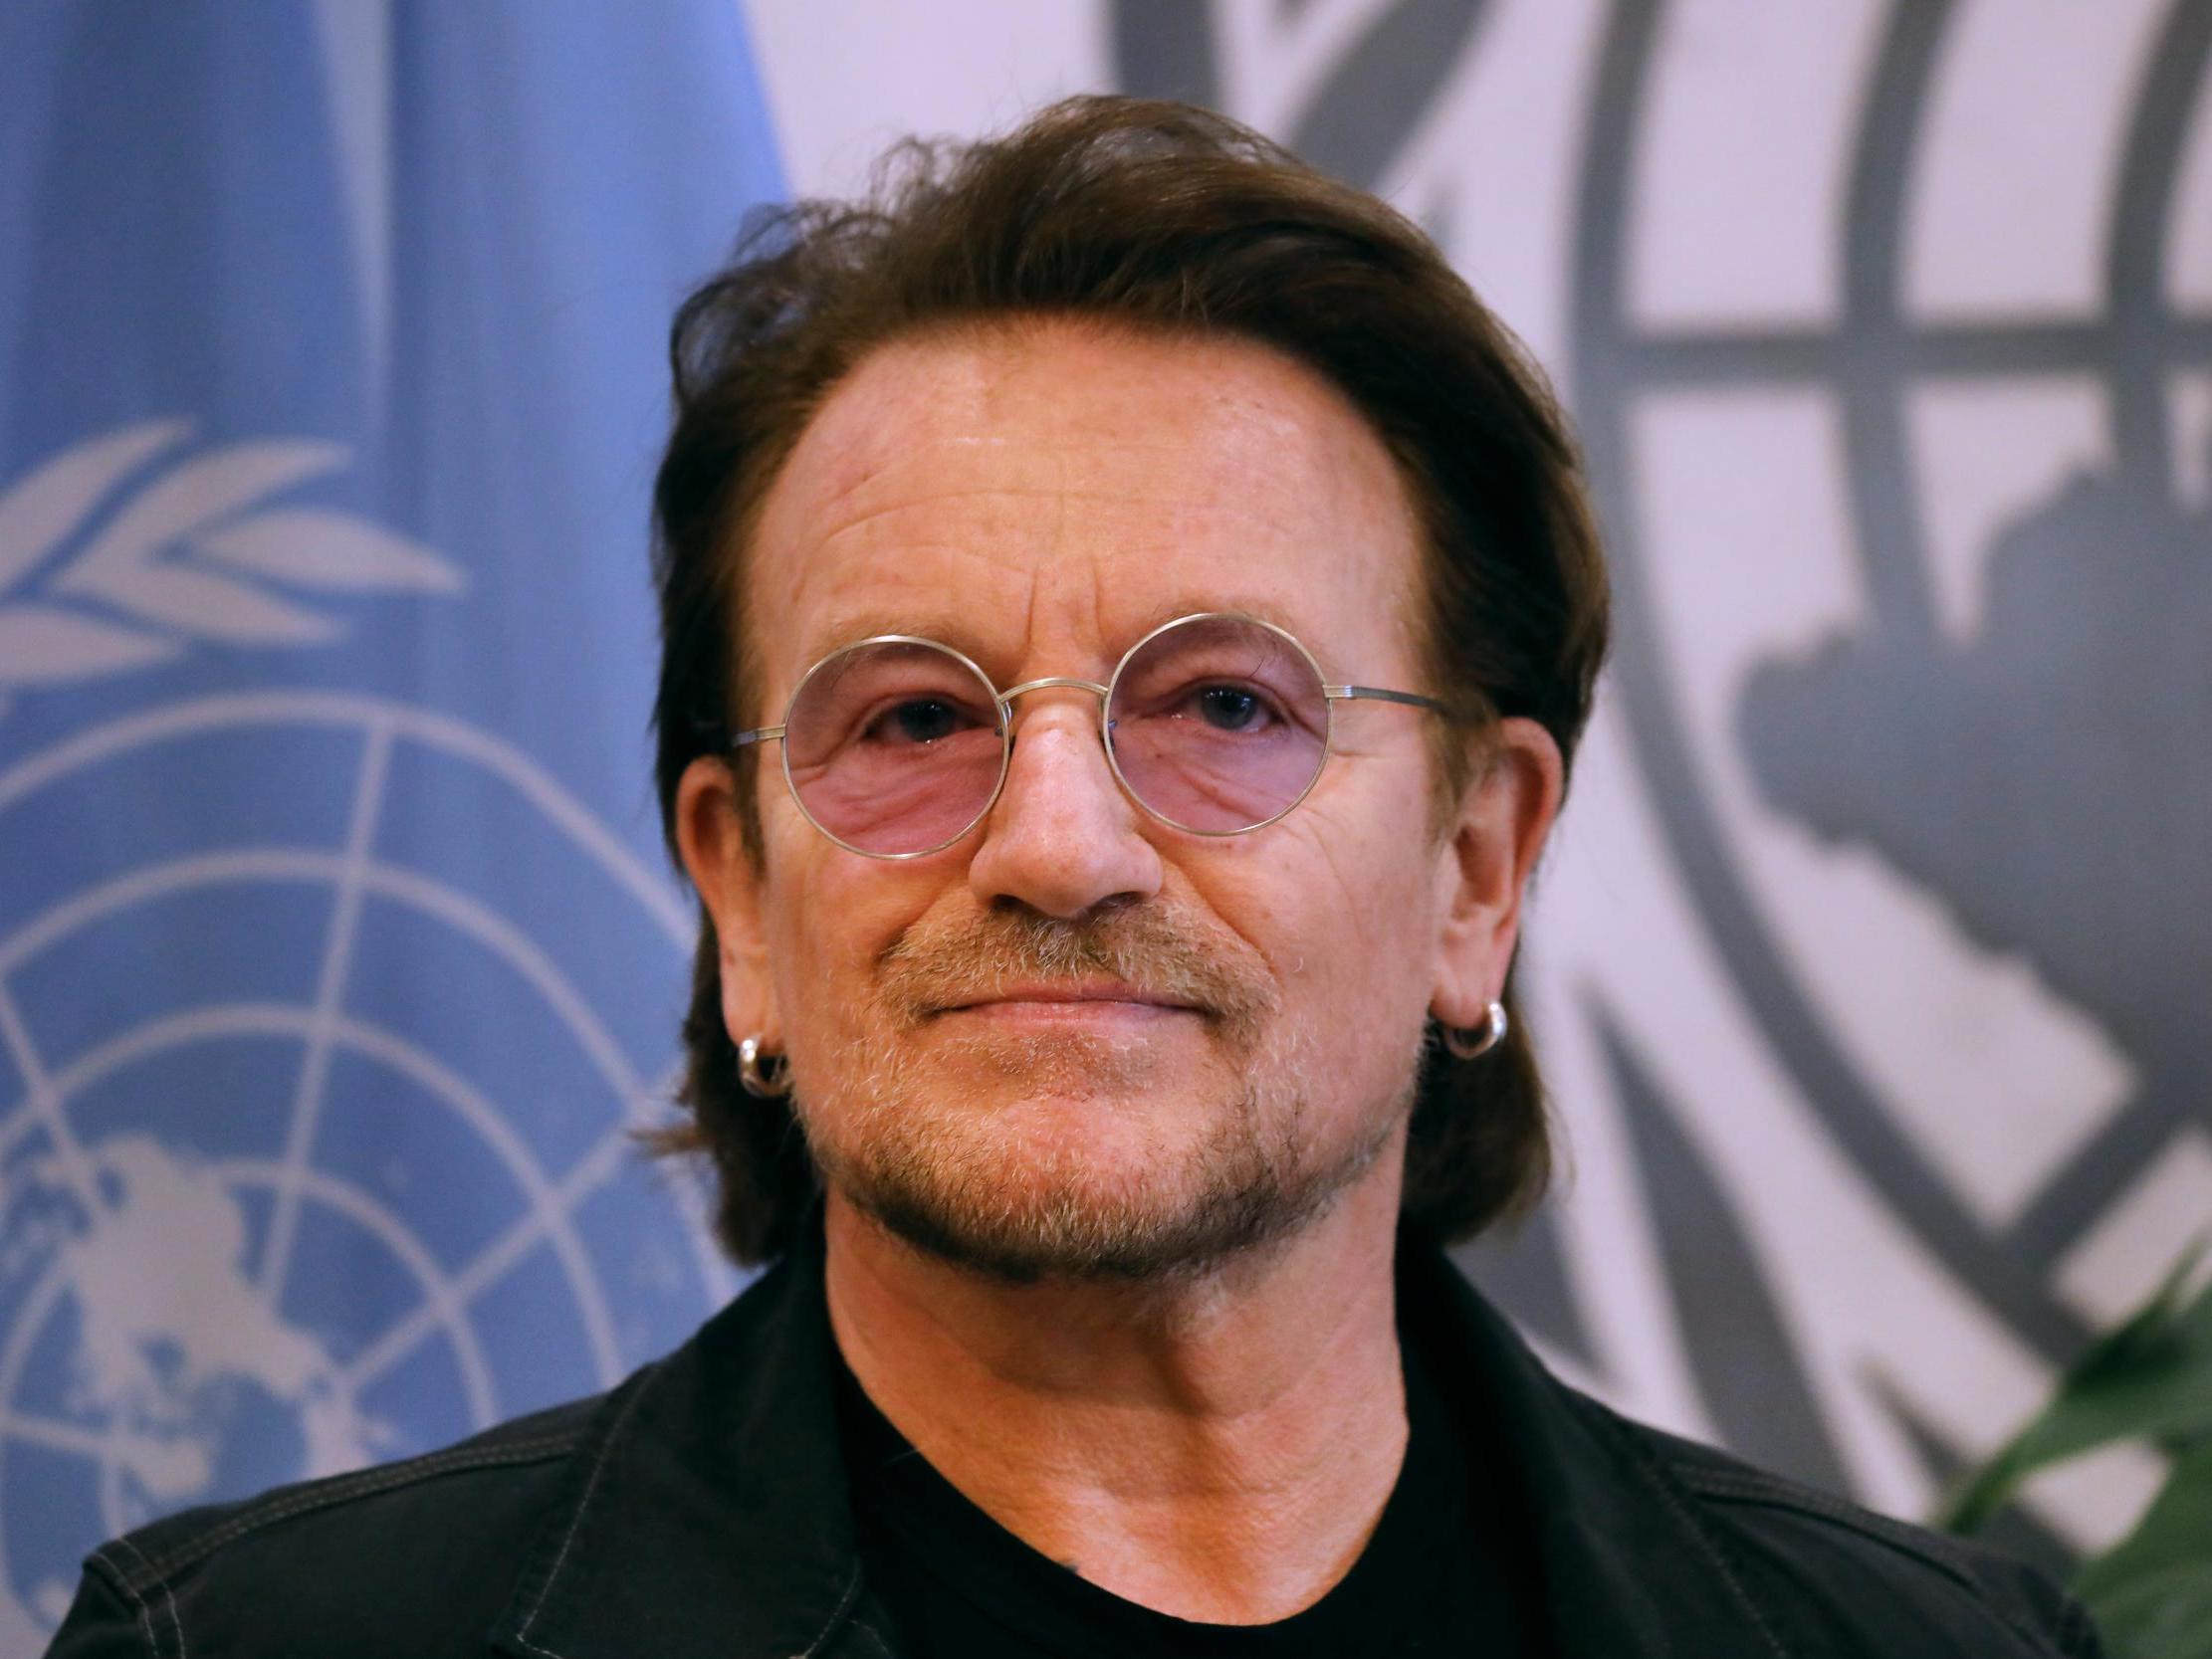 Bono shares new ballad written in tribute to Italy's coronavirus